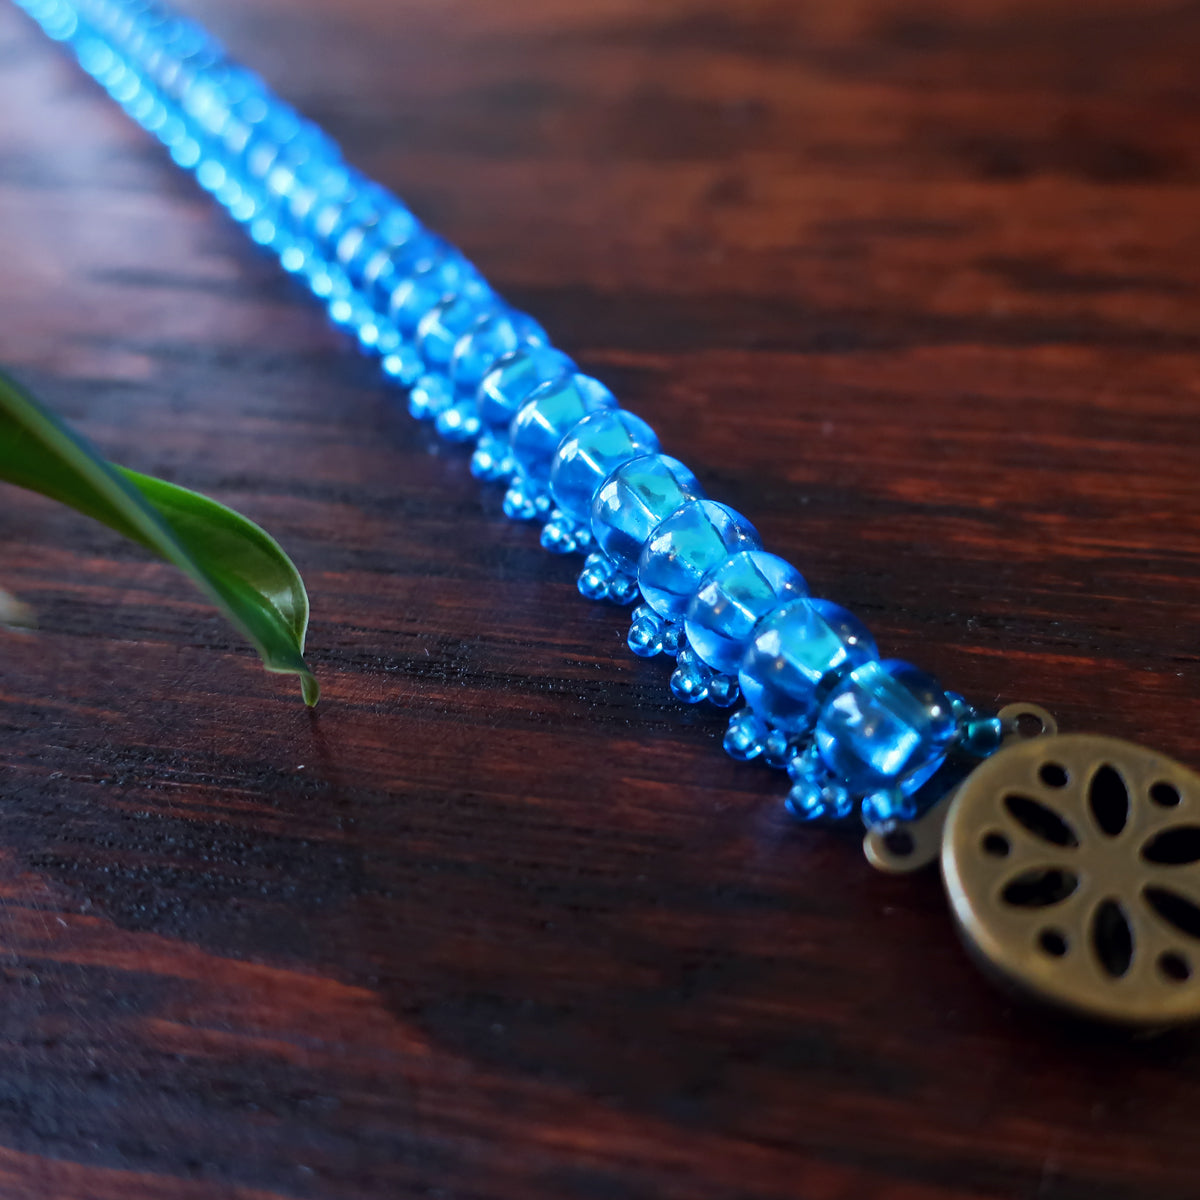 Temple Tree Bohemian Glass Bead Caterpillar Weave Bracelet - Aqua Blue